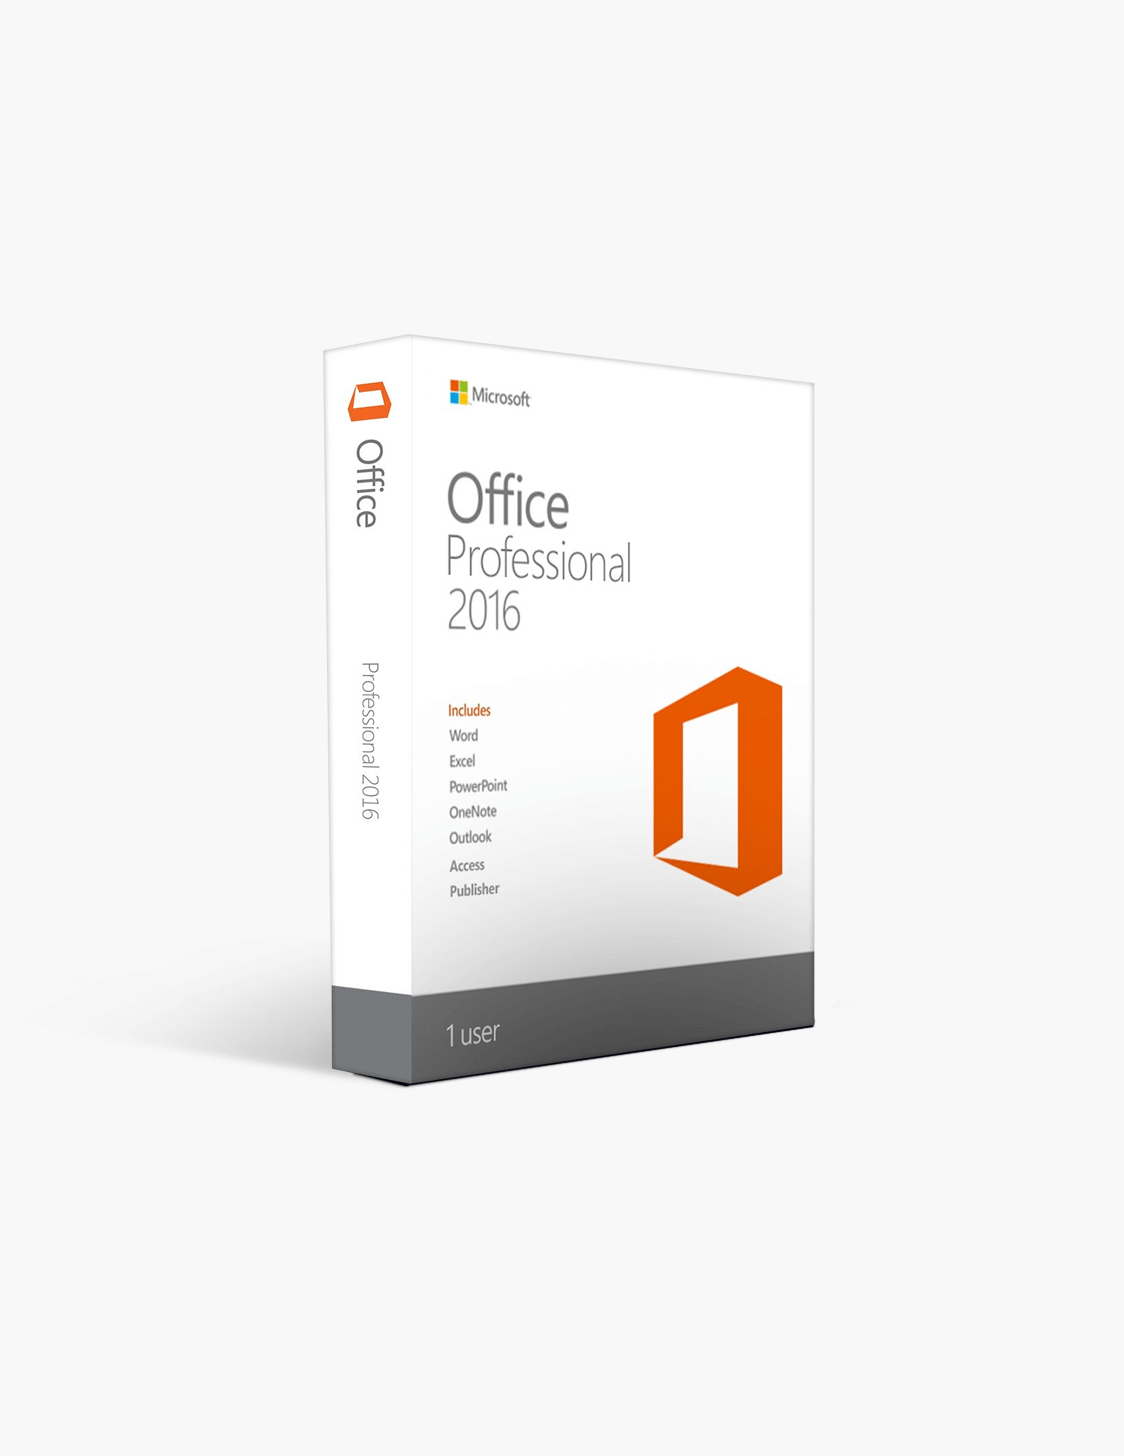 Microsoft Office 2016 Professional 1 